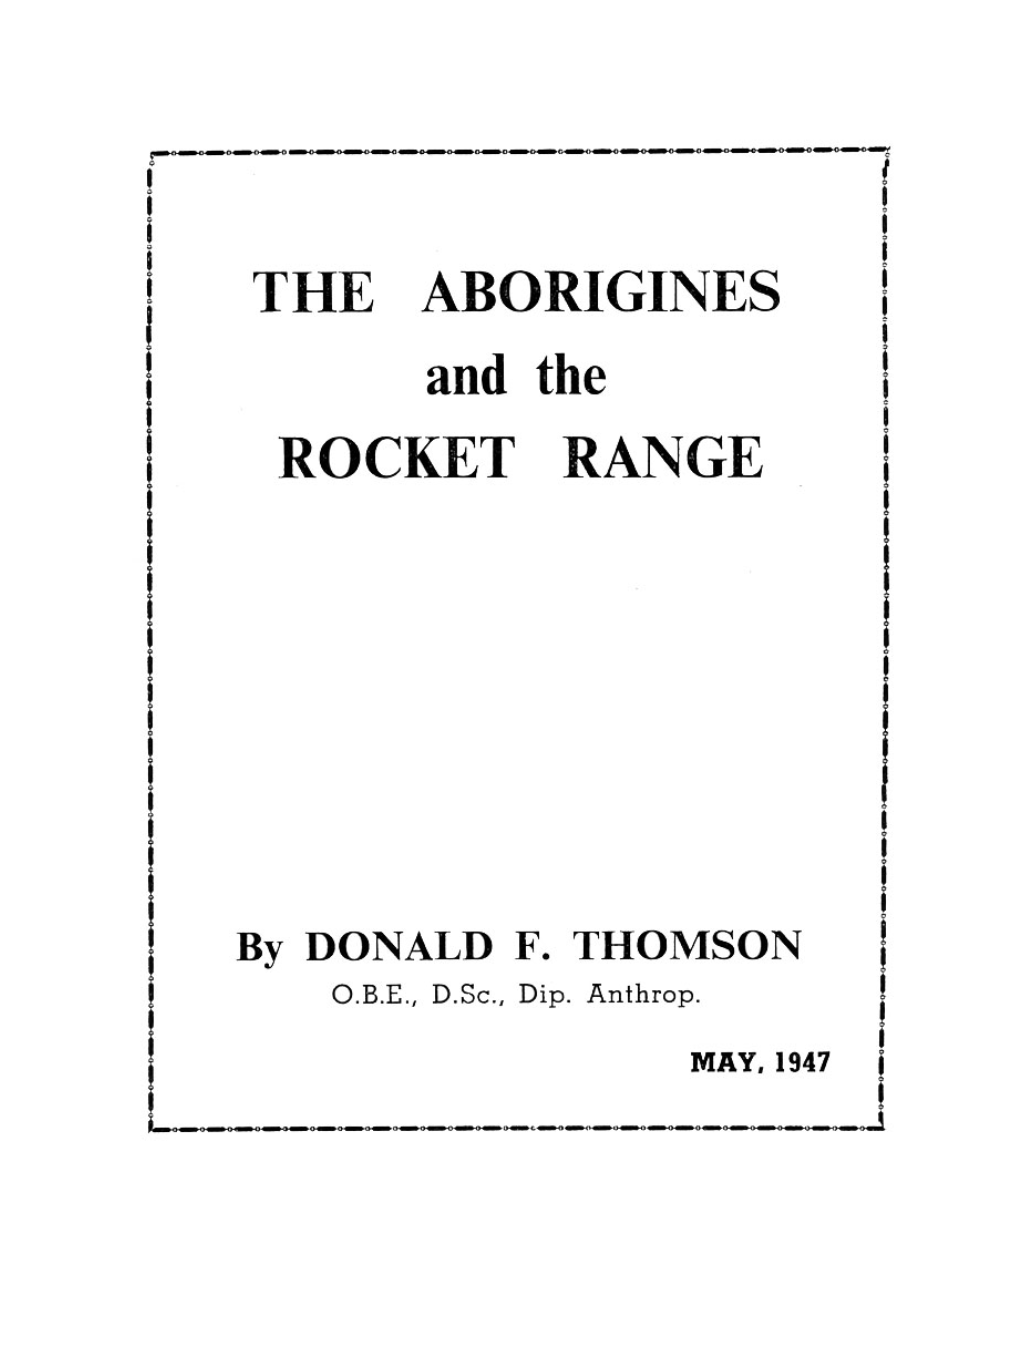 The Aborigines and the Rocket Range